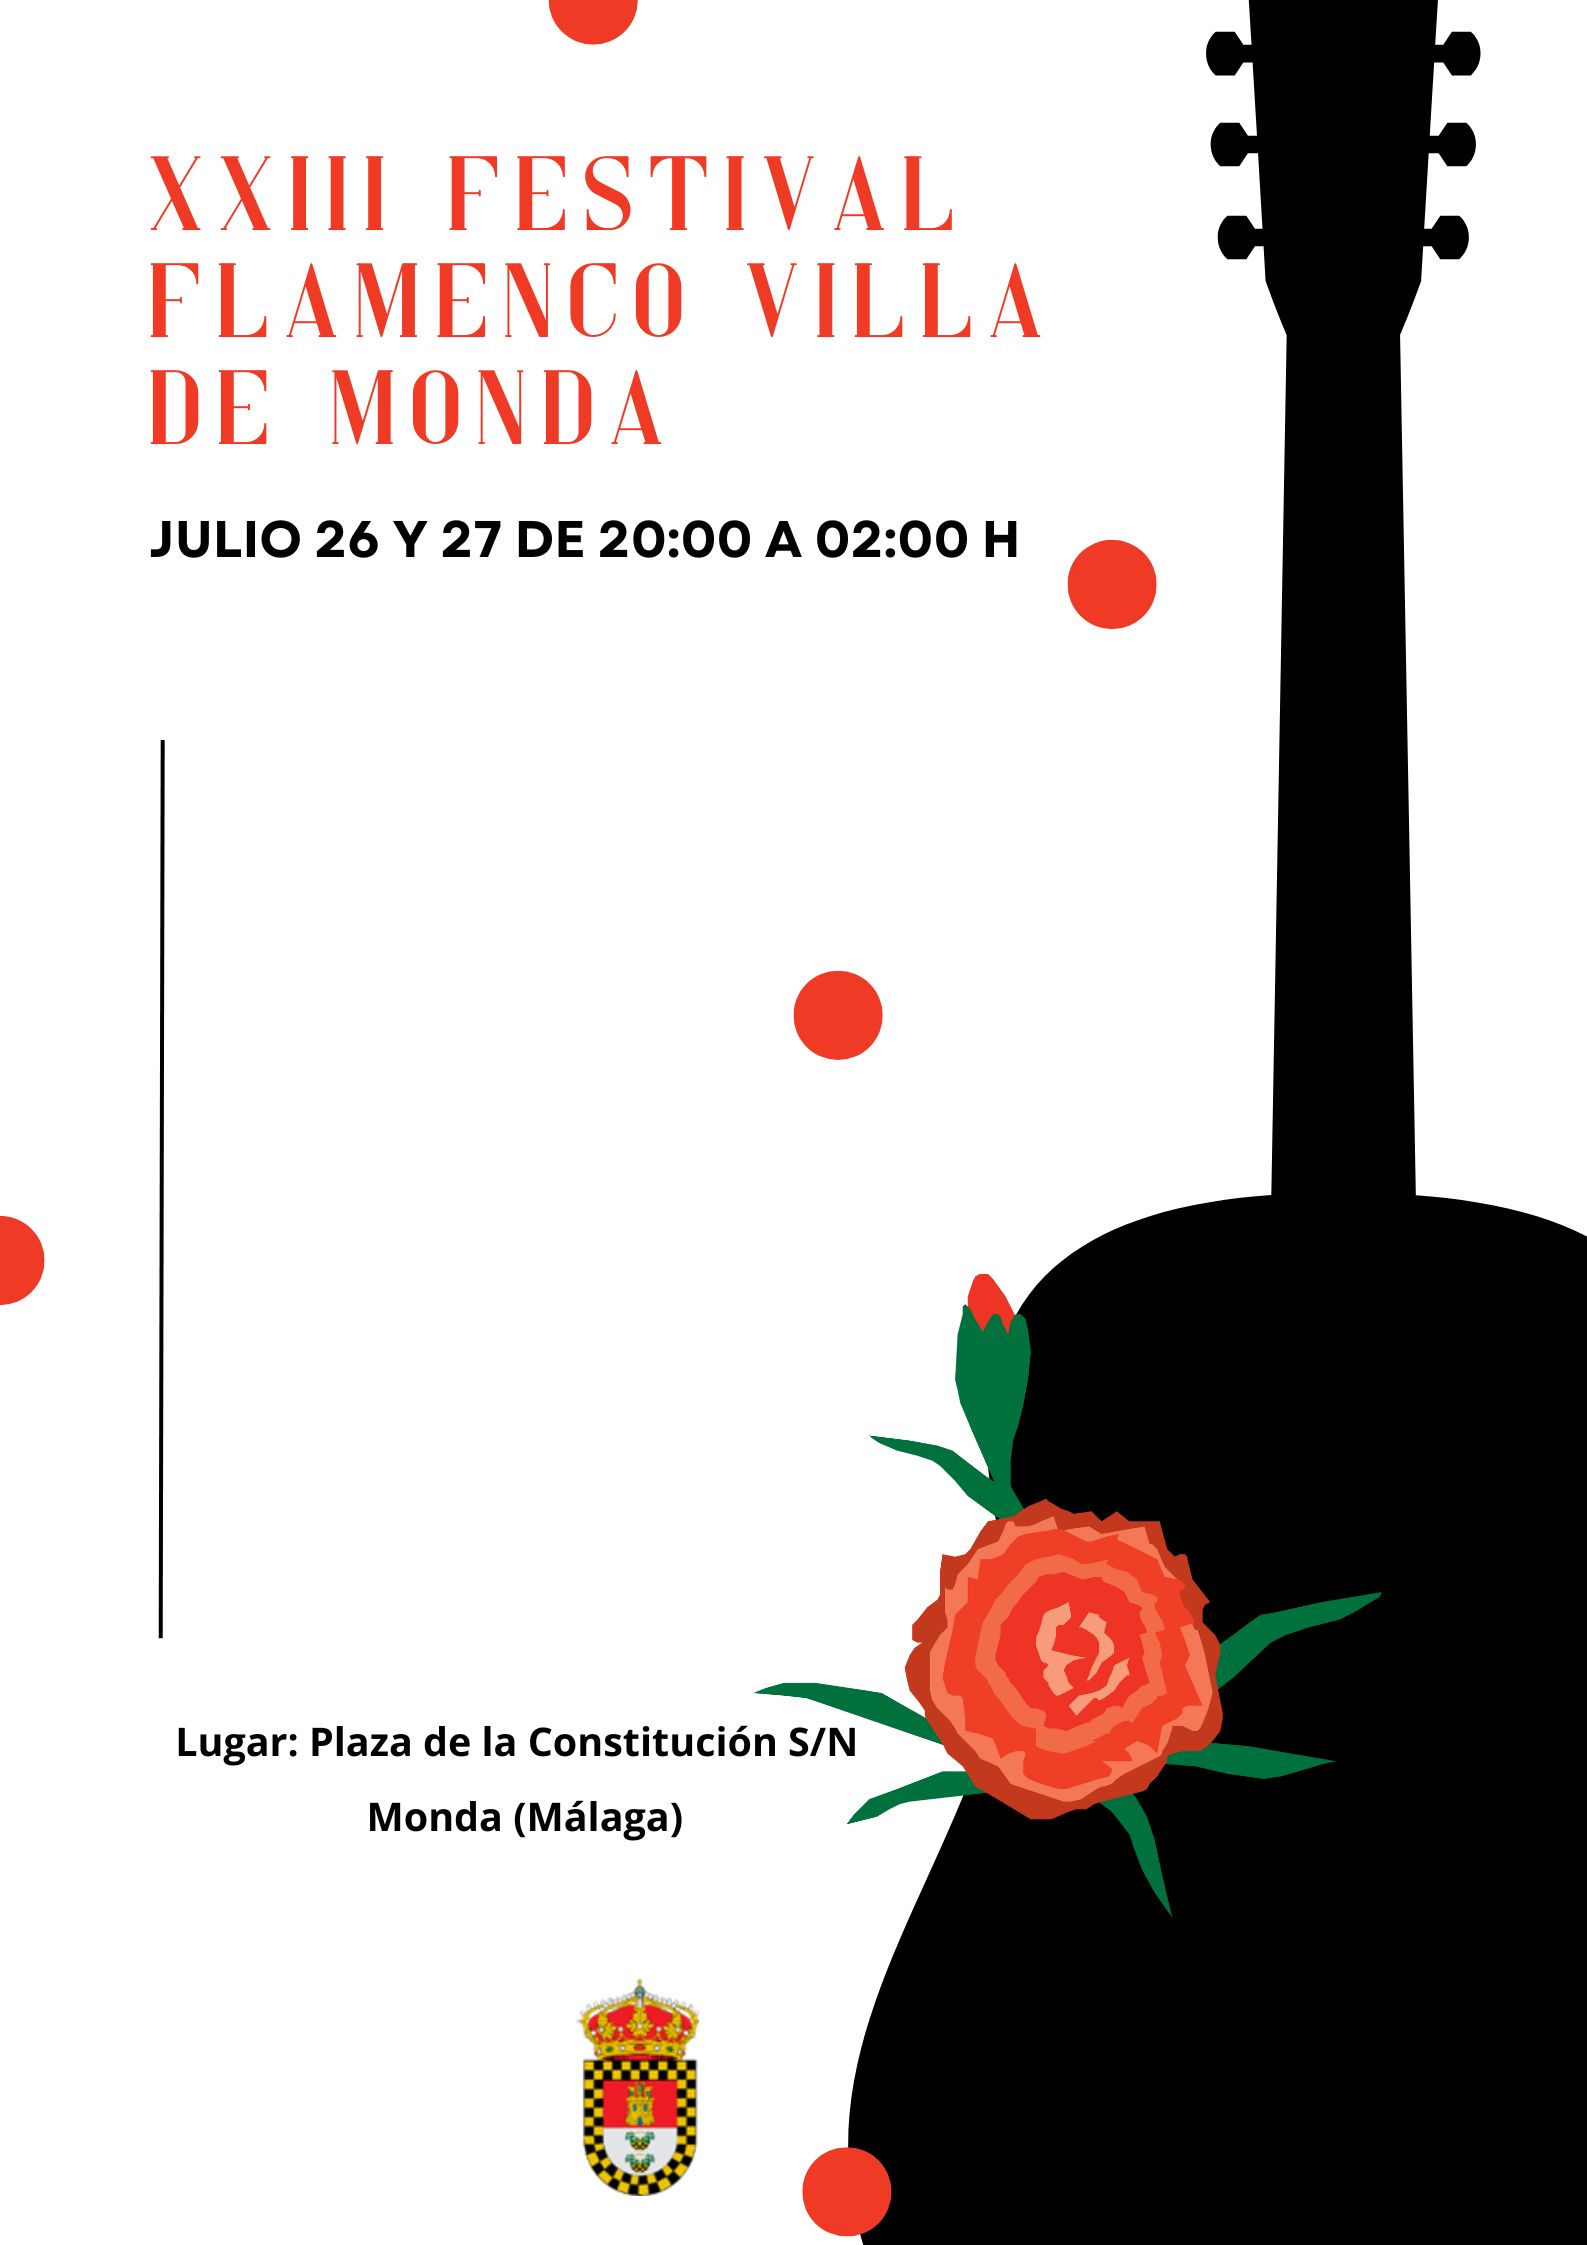 XXIII Festival Flamenco Villa de Monda